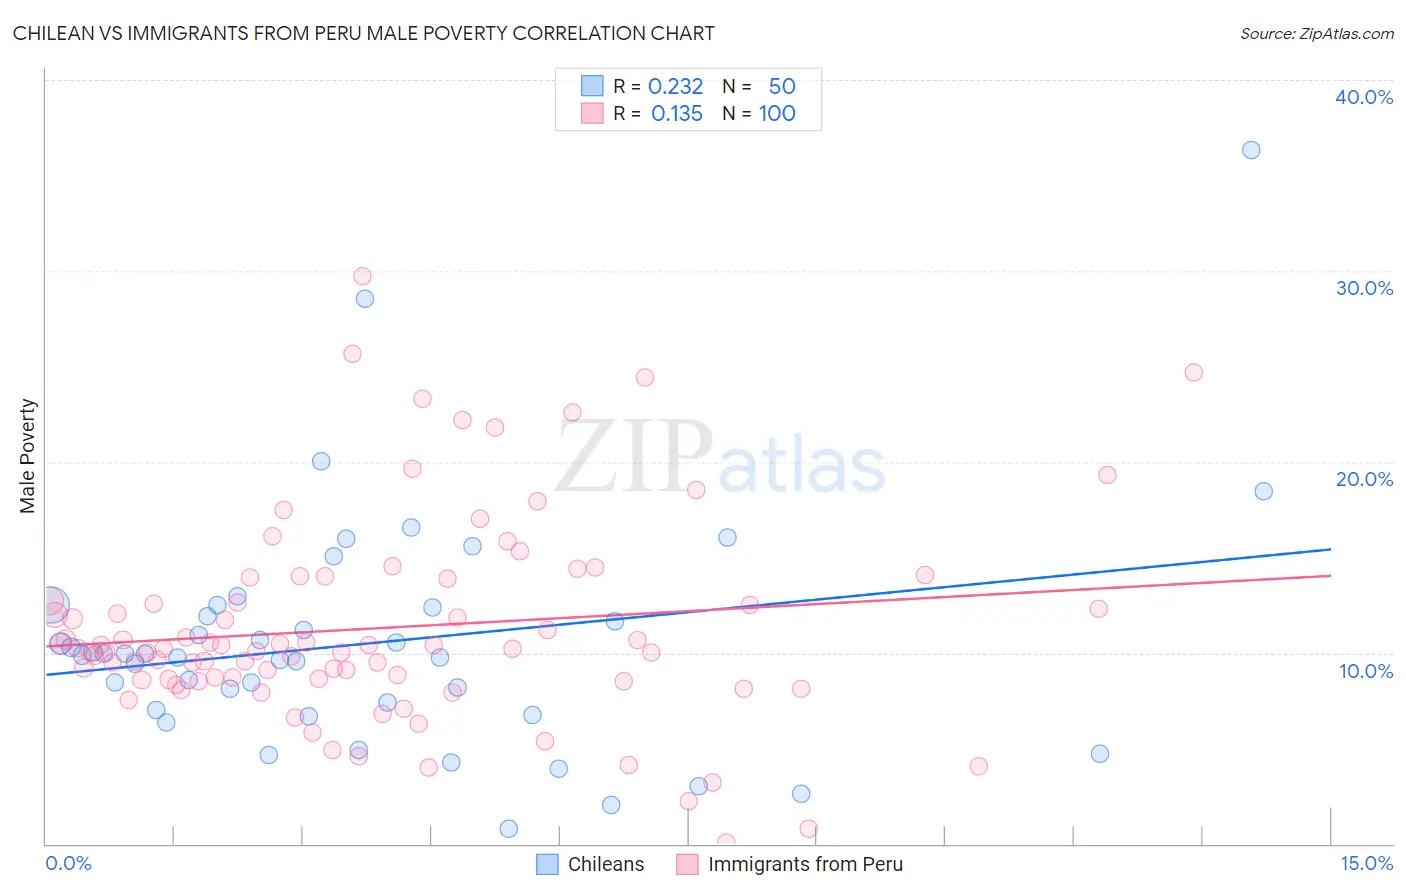 Chilean vs Immigrants from Peru Male Poverty